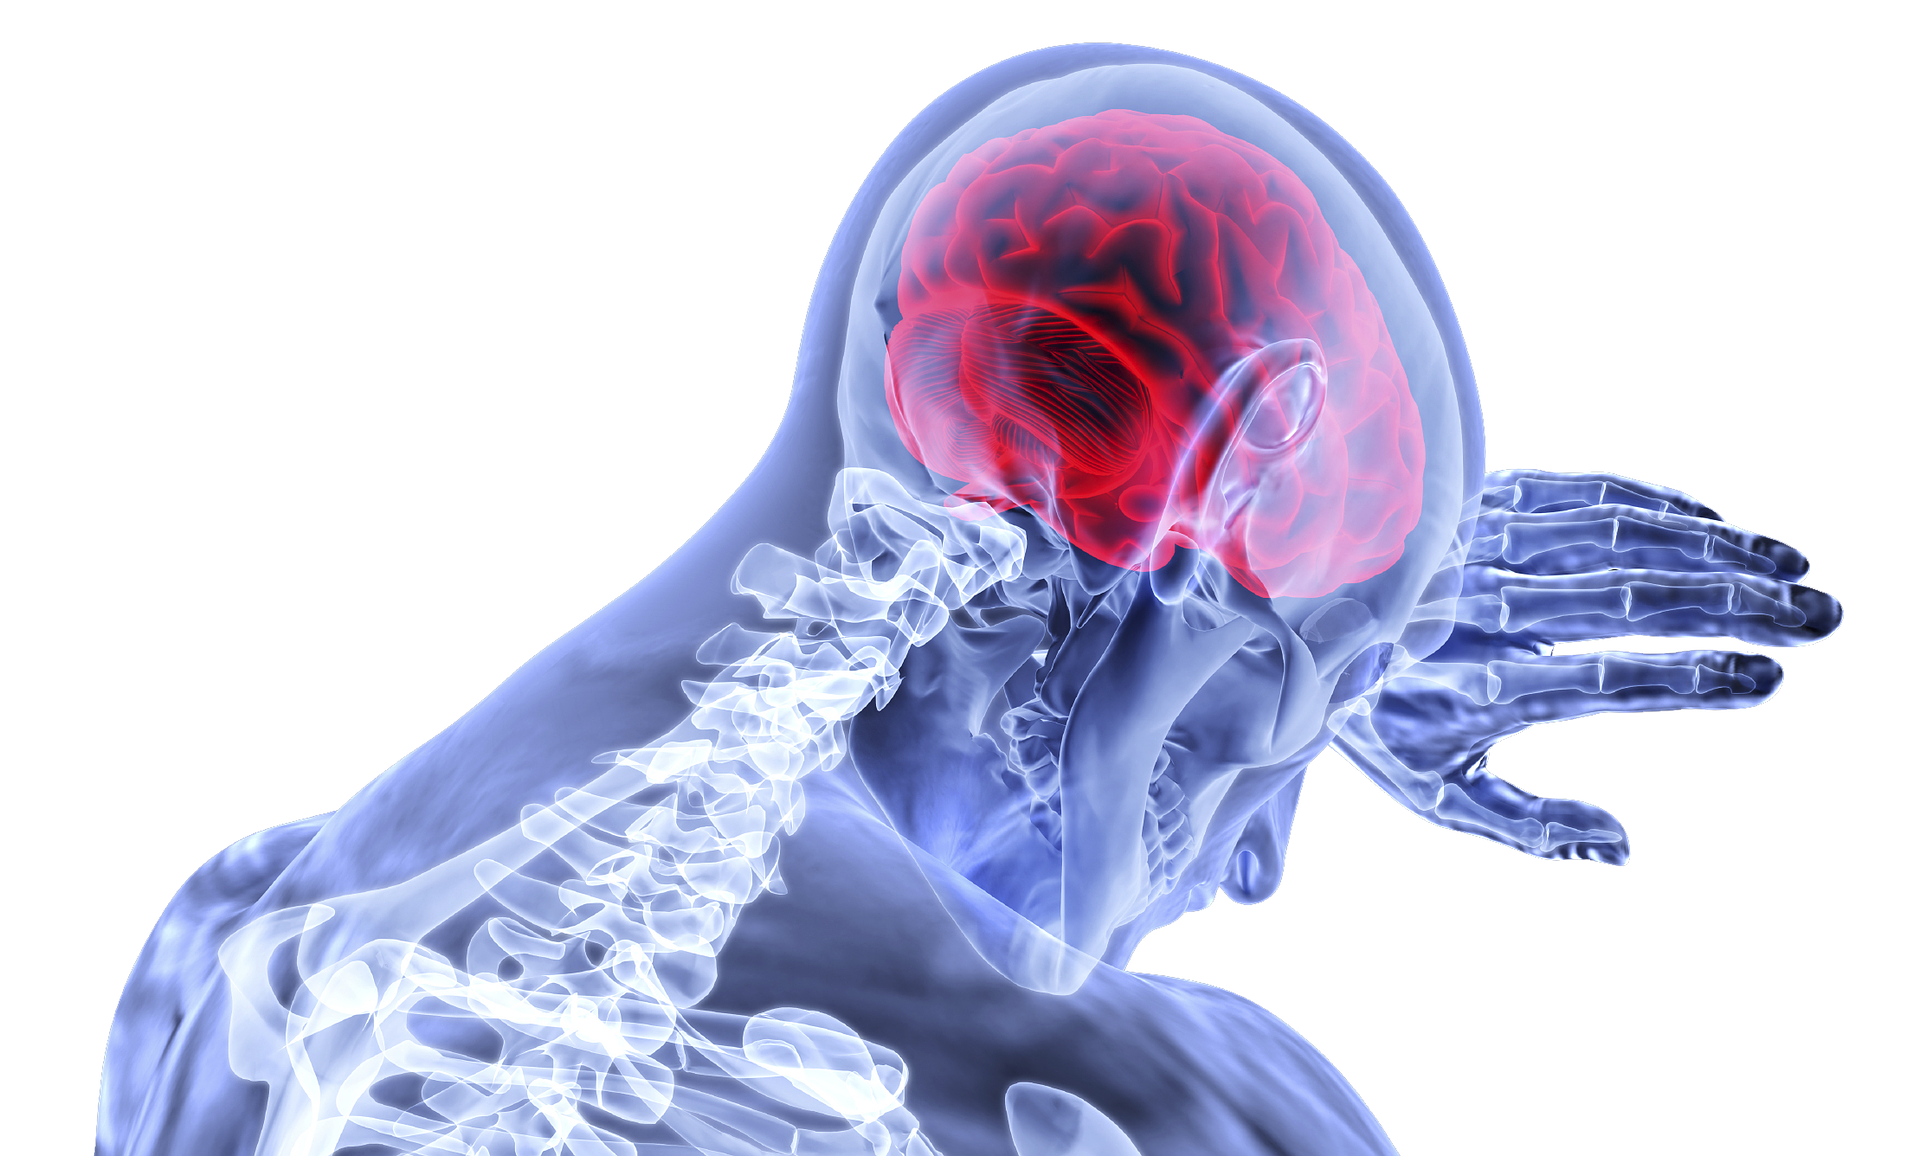 Alzheimer's brain: Image by VSRao from Pixabay